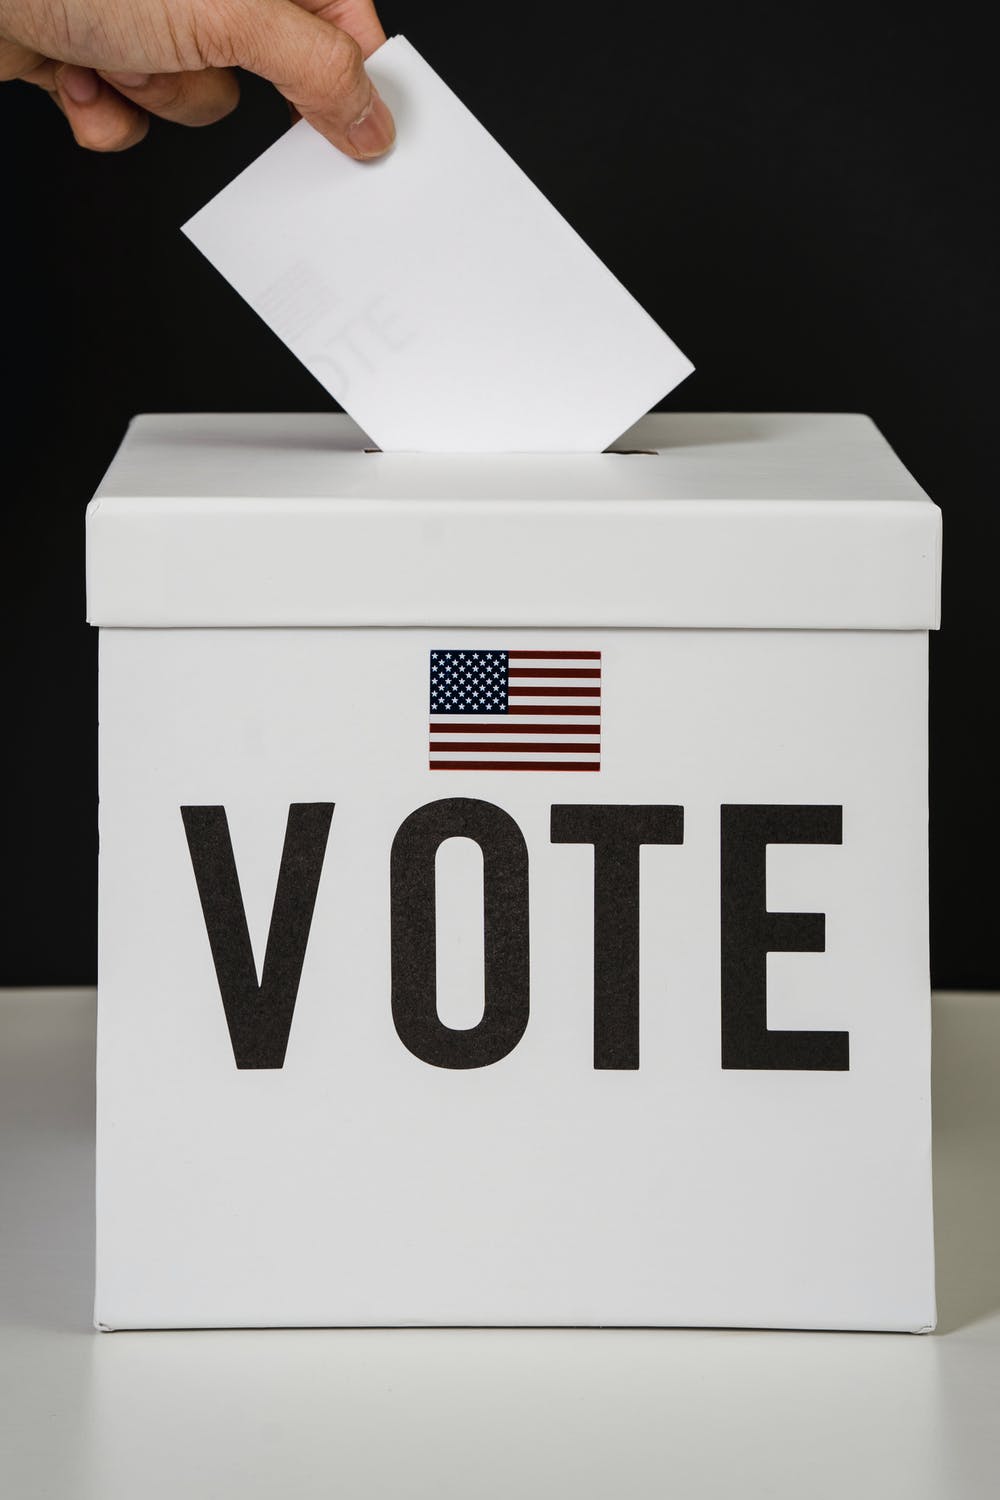 Voting continues this week in clerk’s office